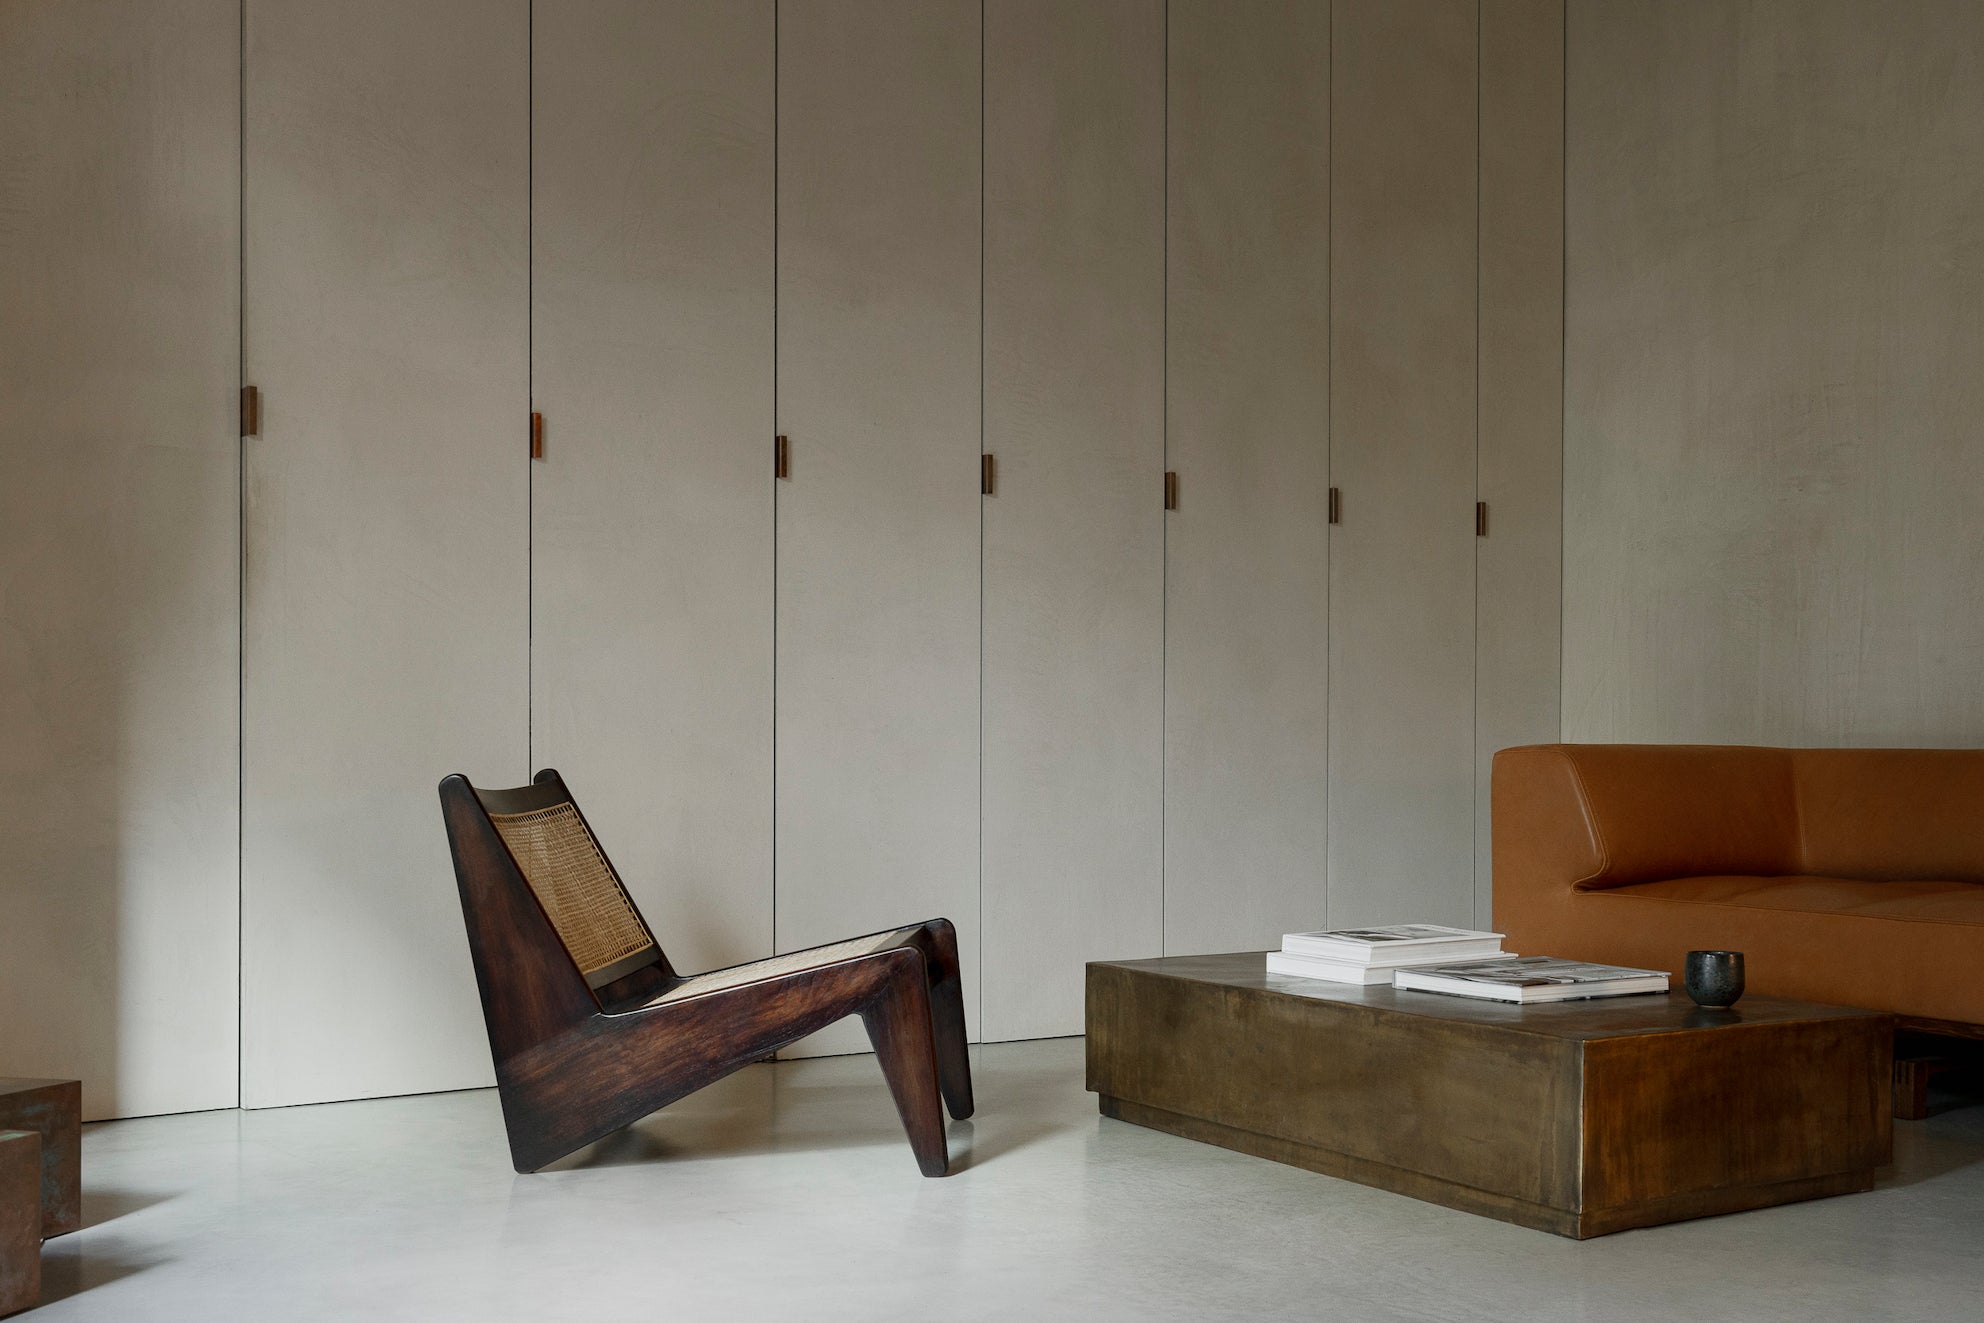 Pierre Jeanneret Kangaroo chair - The Design Part